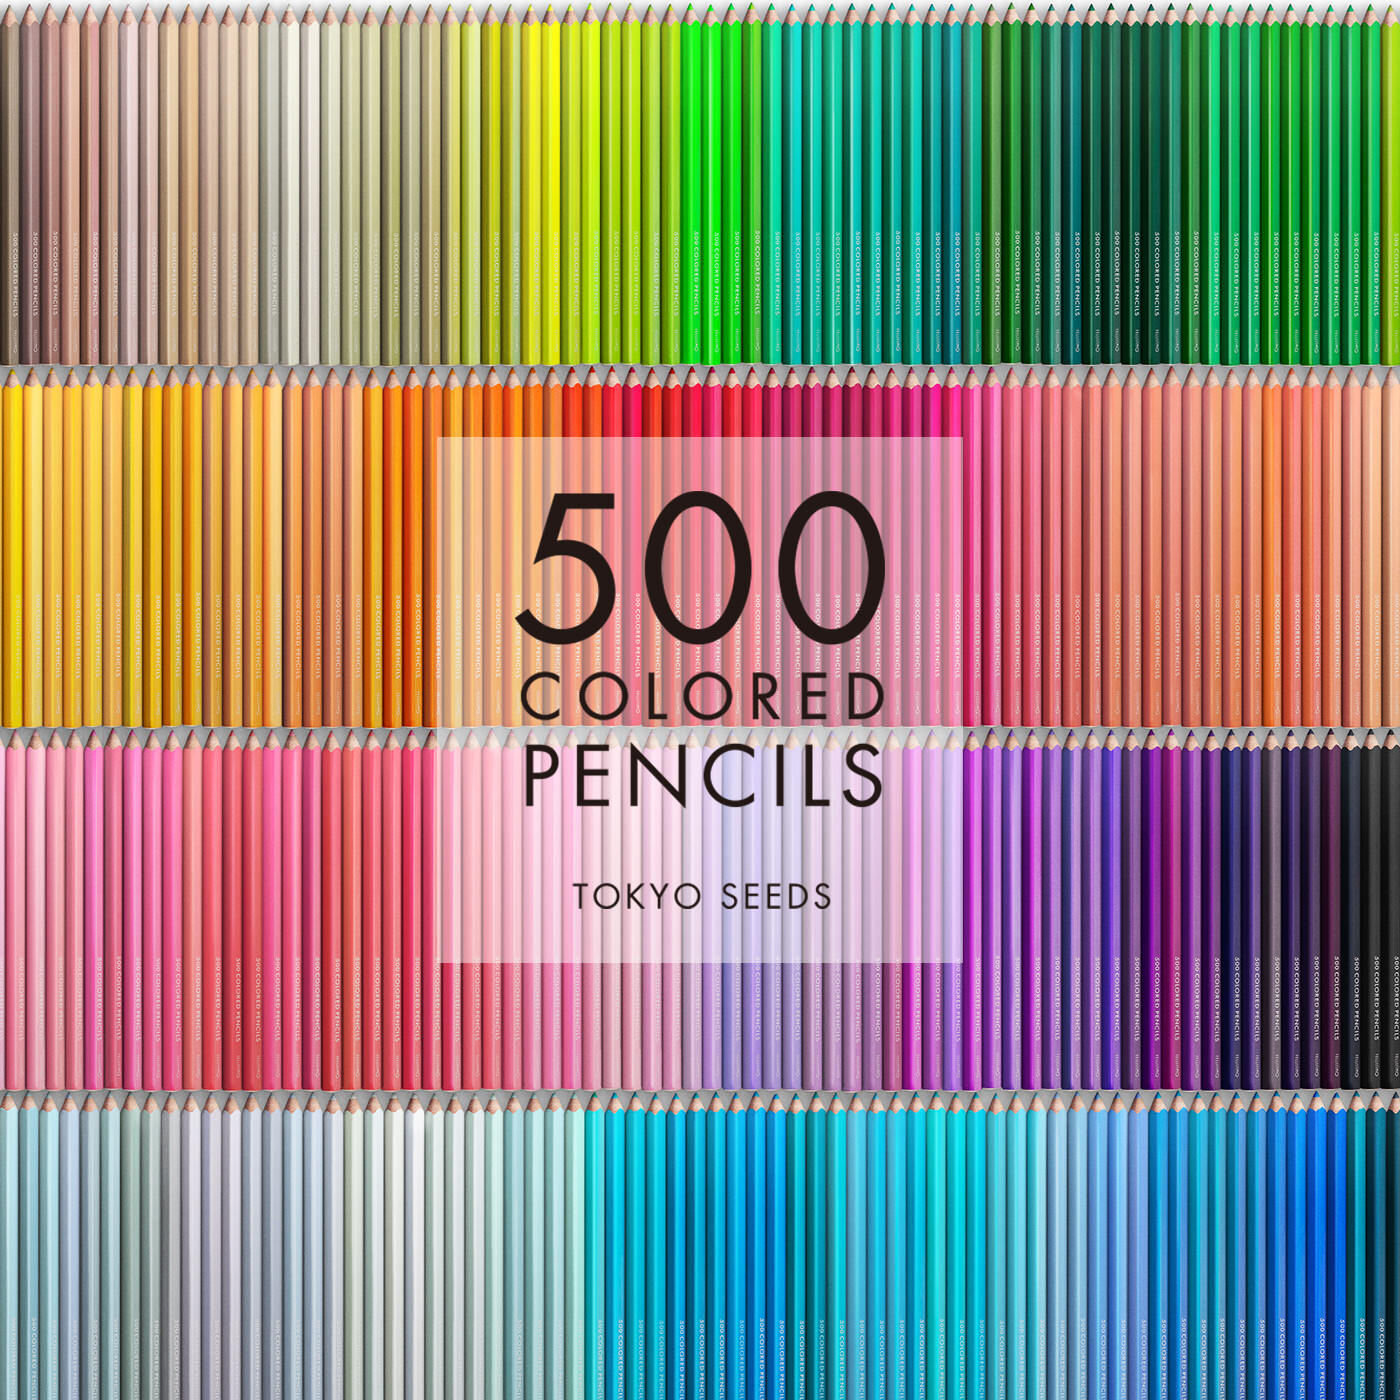 Real Stock|【348/500 TEAL RIVER】500色の色えんぴつ TOKYO SEEDS|1992年、世界初の「500色」という膨大な色数の色えんぴつが誕生して以来、その販売数は発売当初から合わせると、世界55ヵ国10万セット以上。今回、メイド・イン・ジャパンにこだわり、すべてが新しく生まれ変わって登場しました。